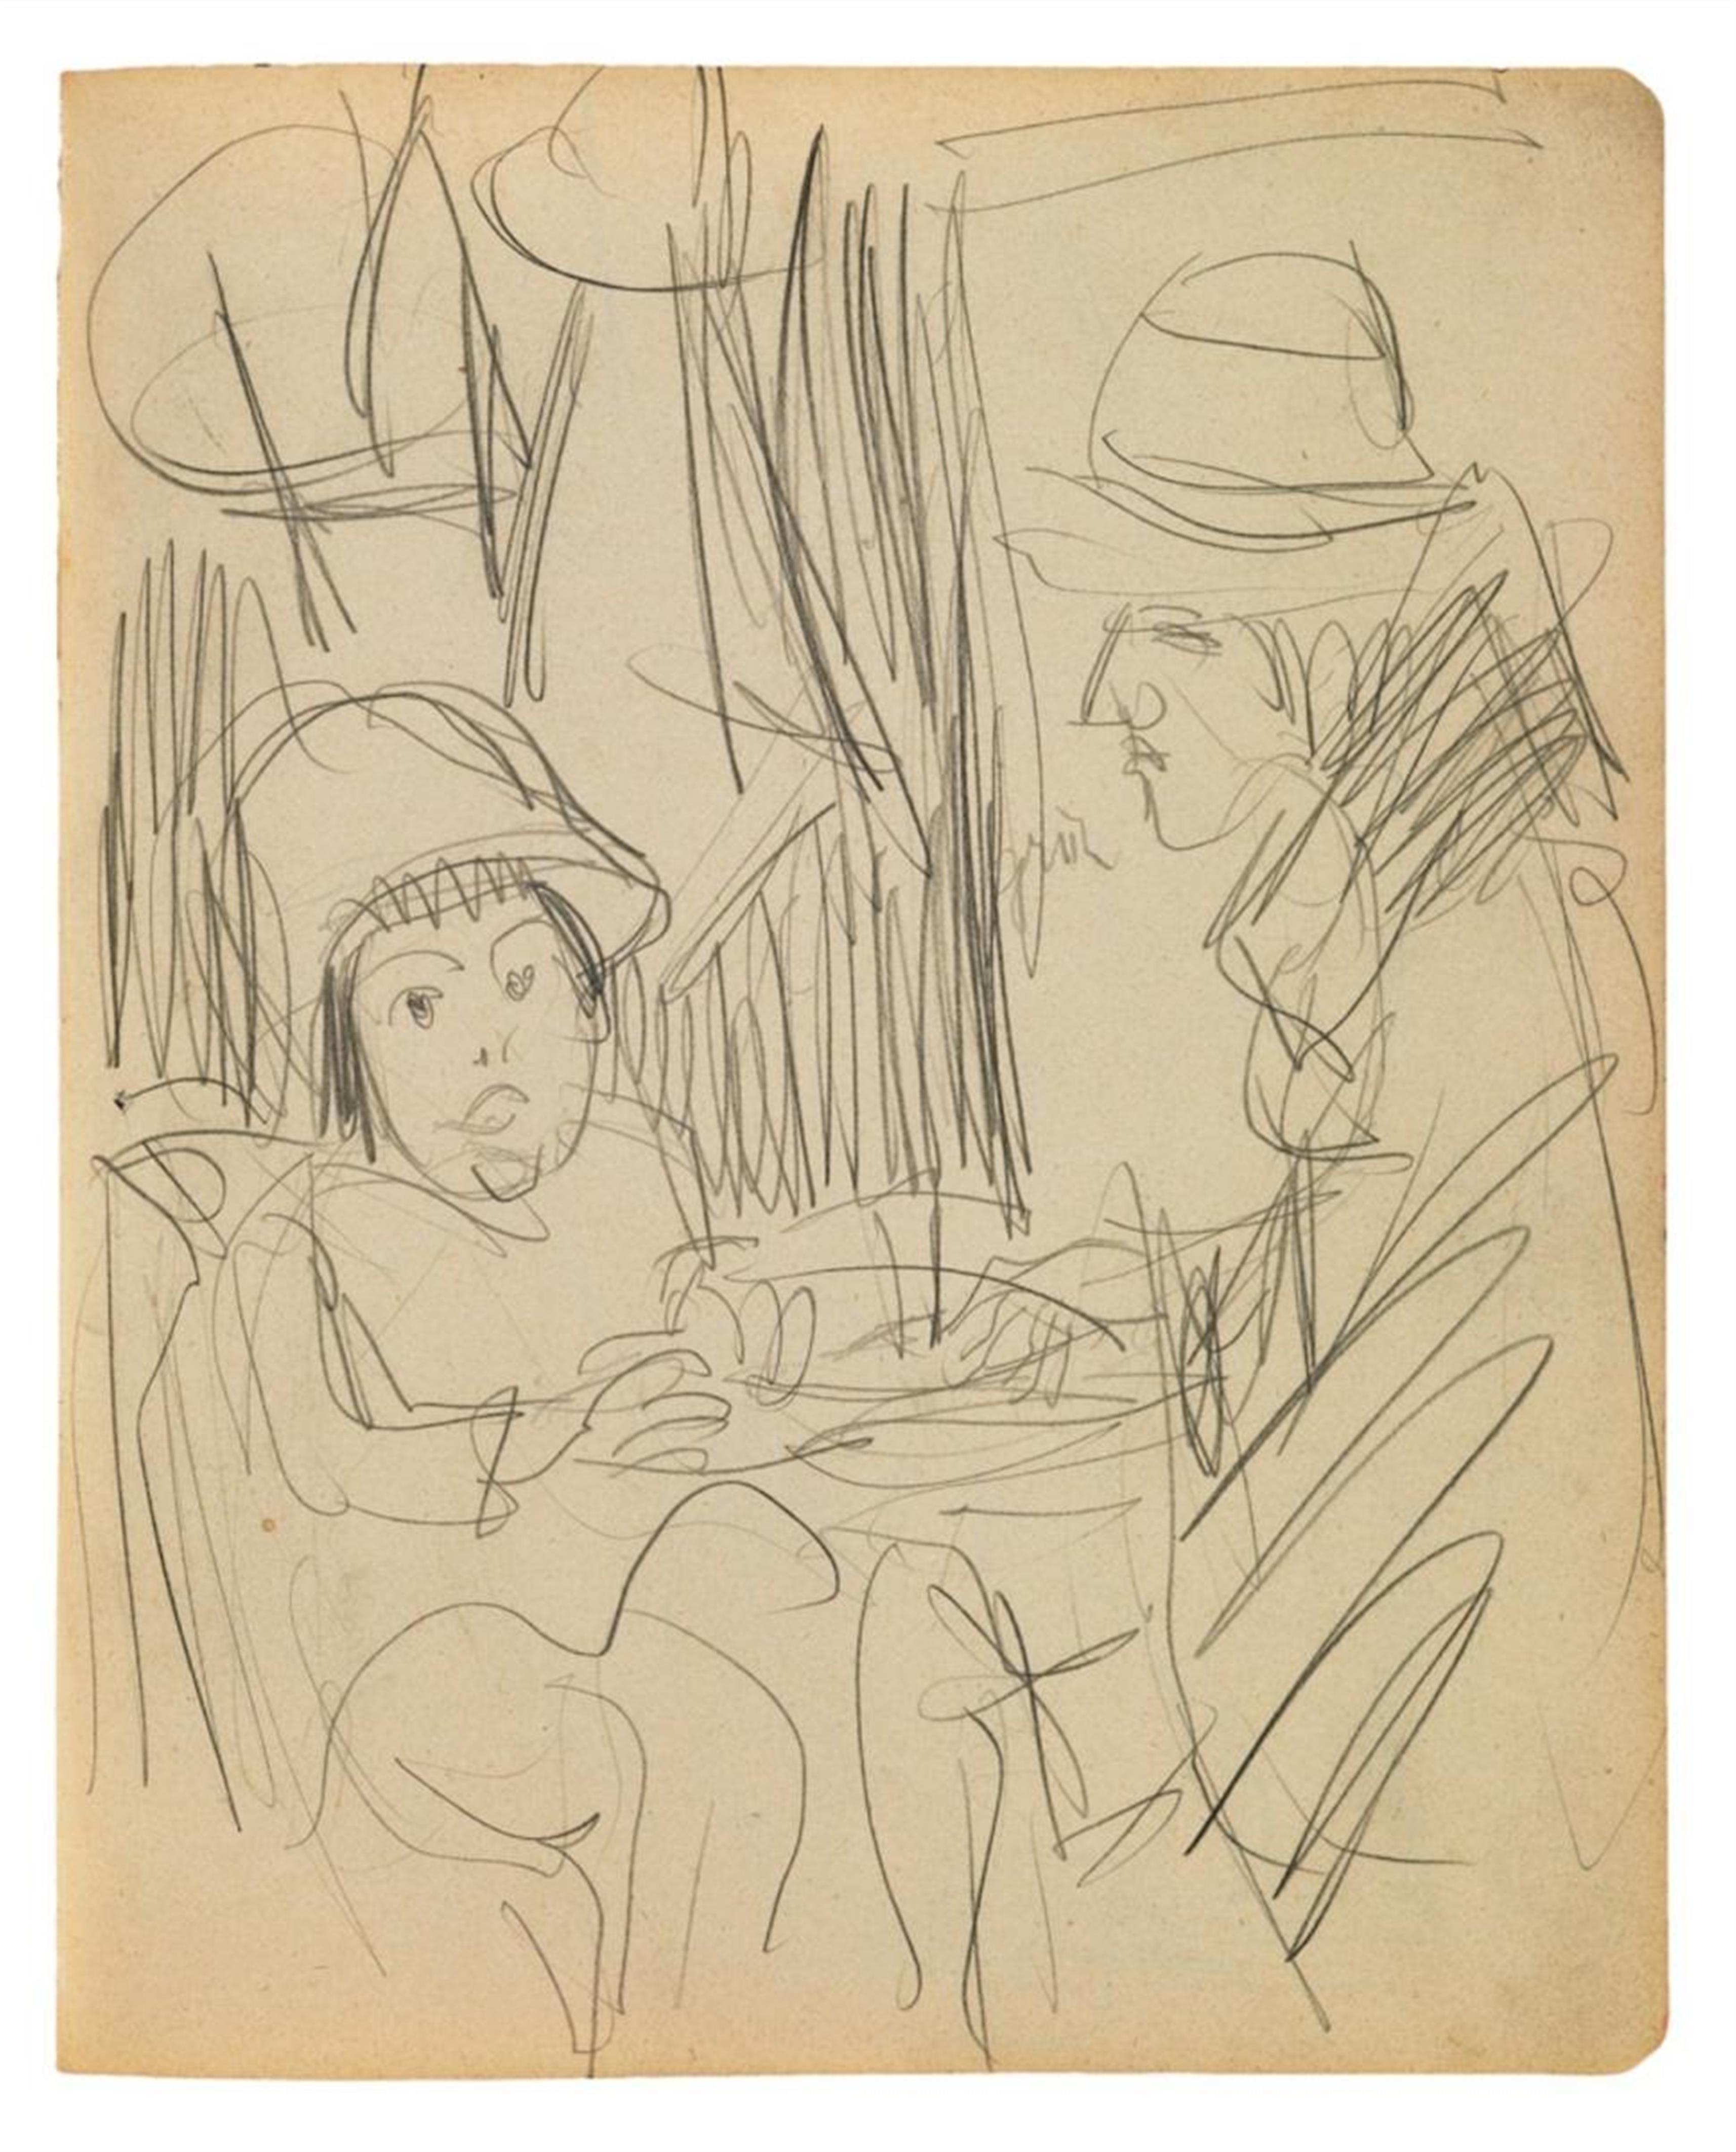 Ernst Ludwig Kirchner - Skizzenbuch - image-5